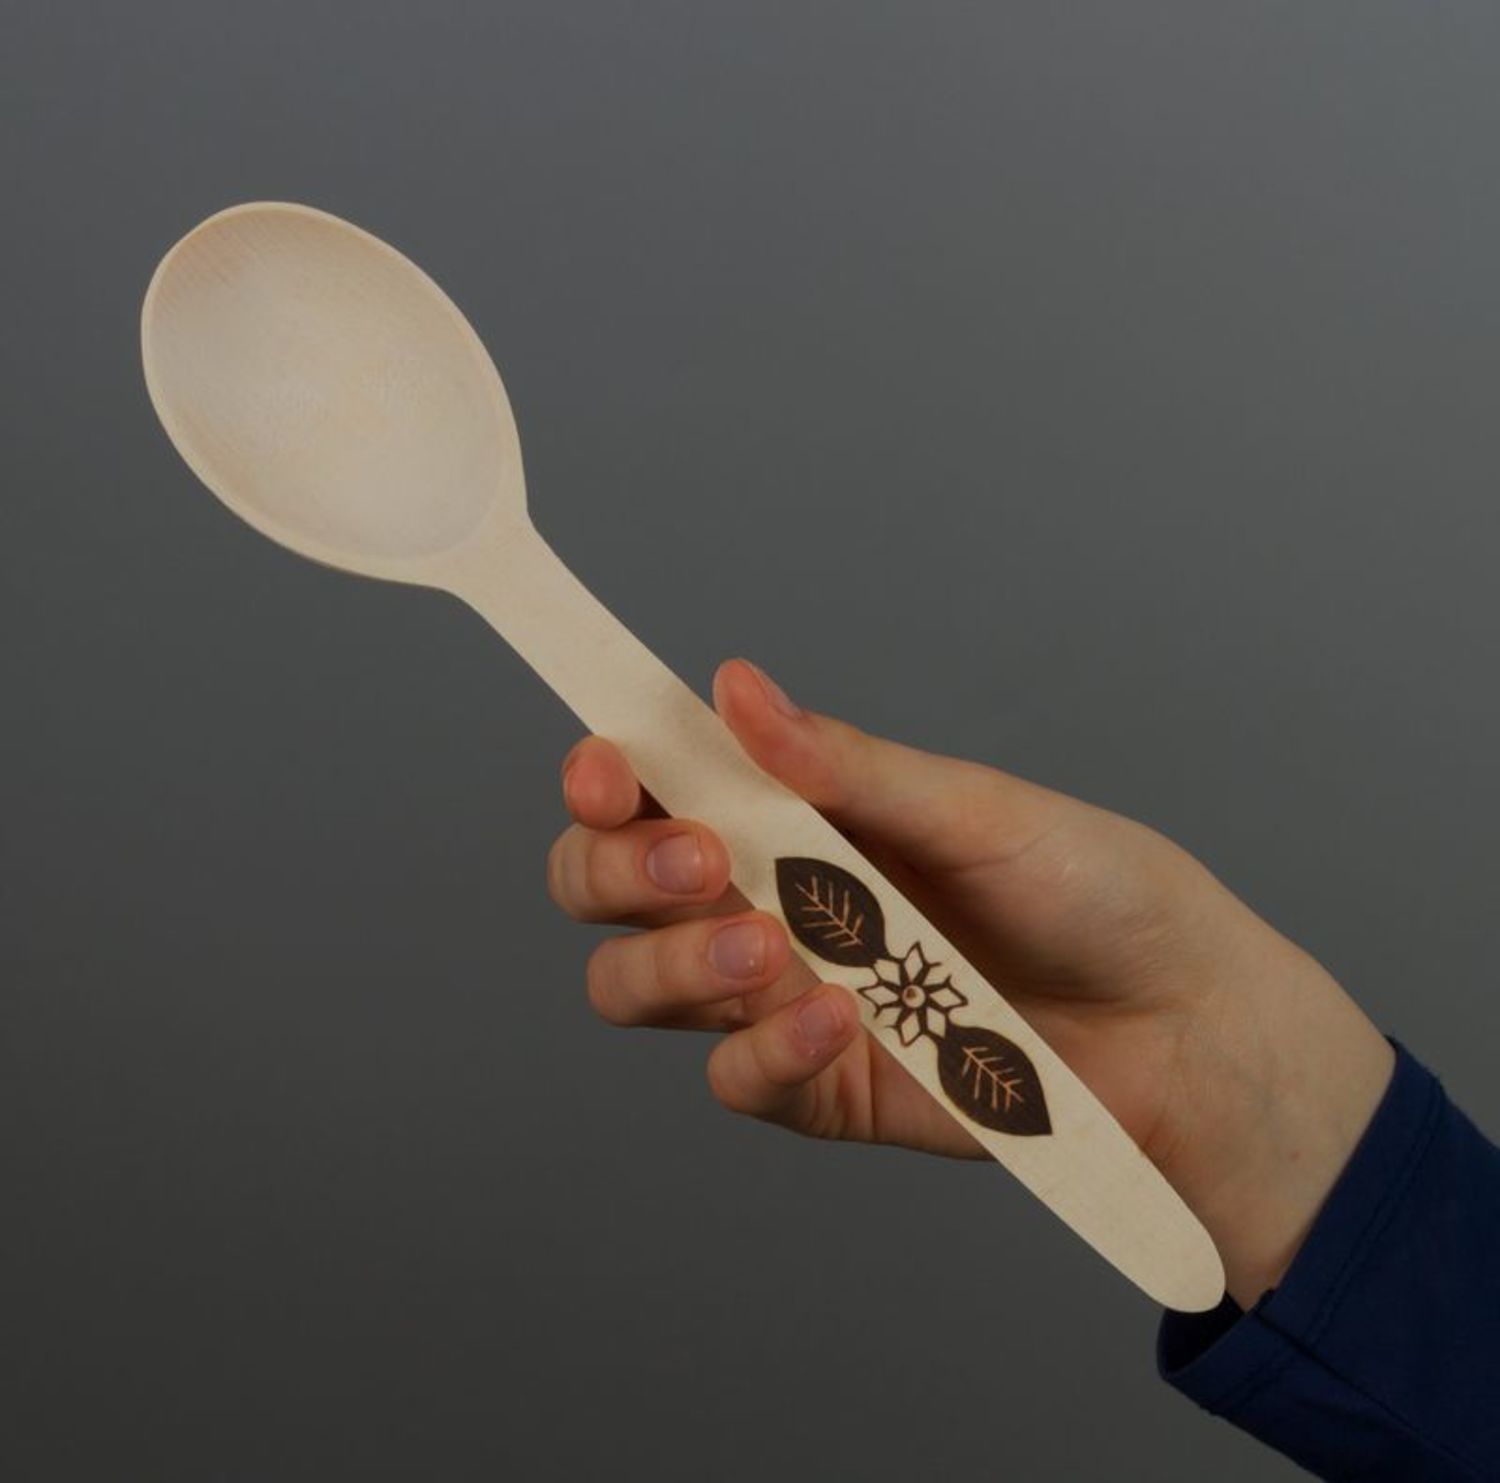 Wooden spoon photo 2